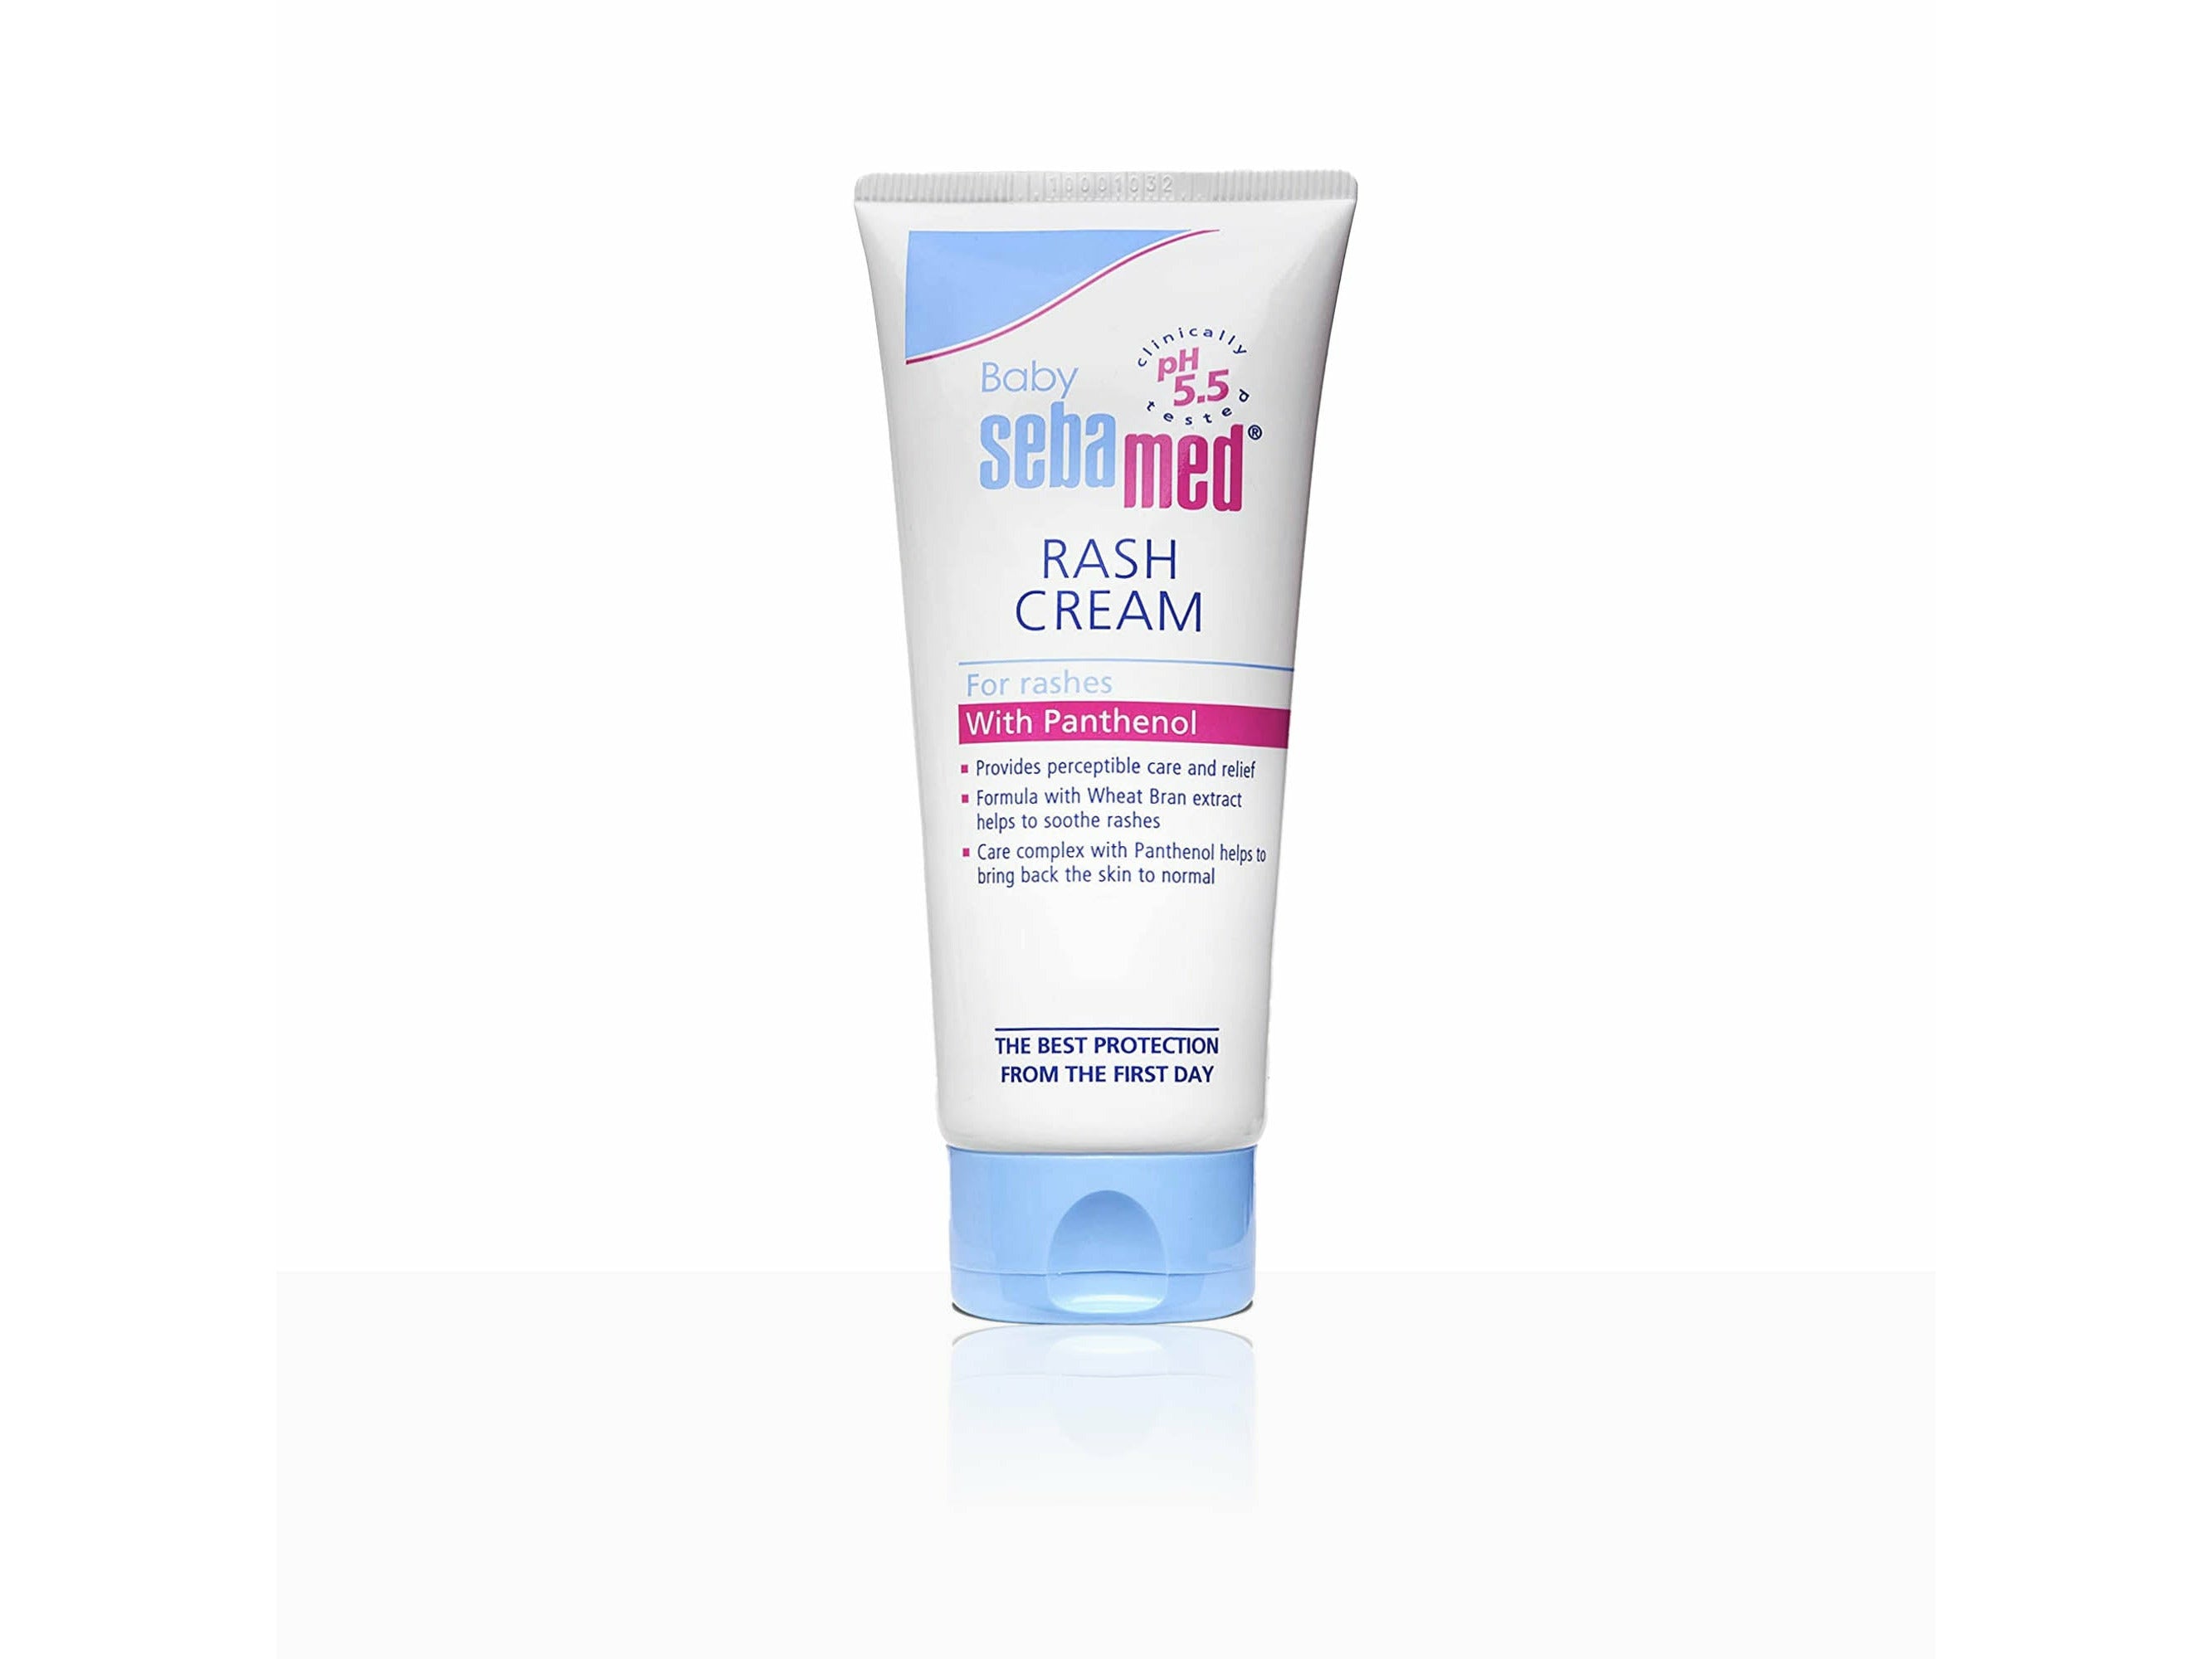 Sebamed Baby Rash Cream - Clinikally